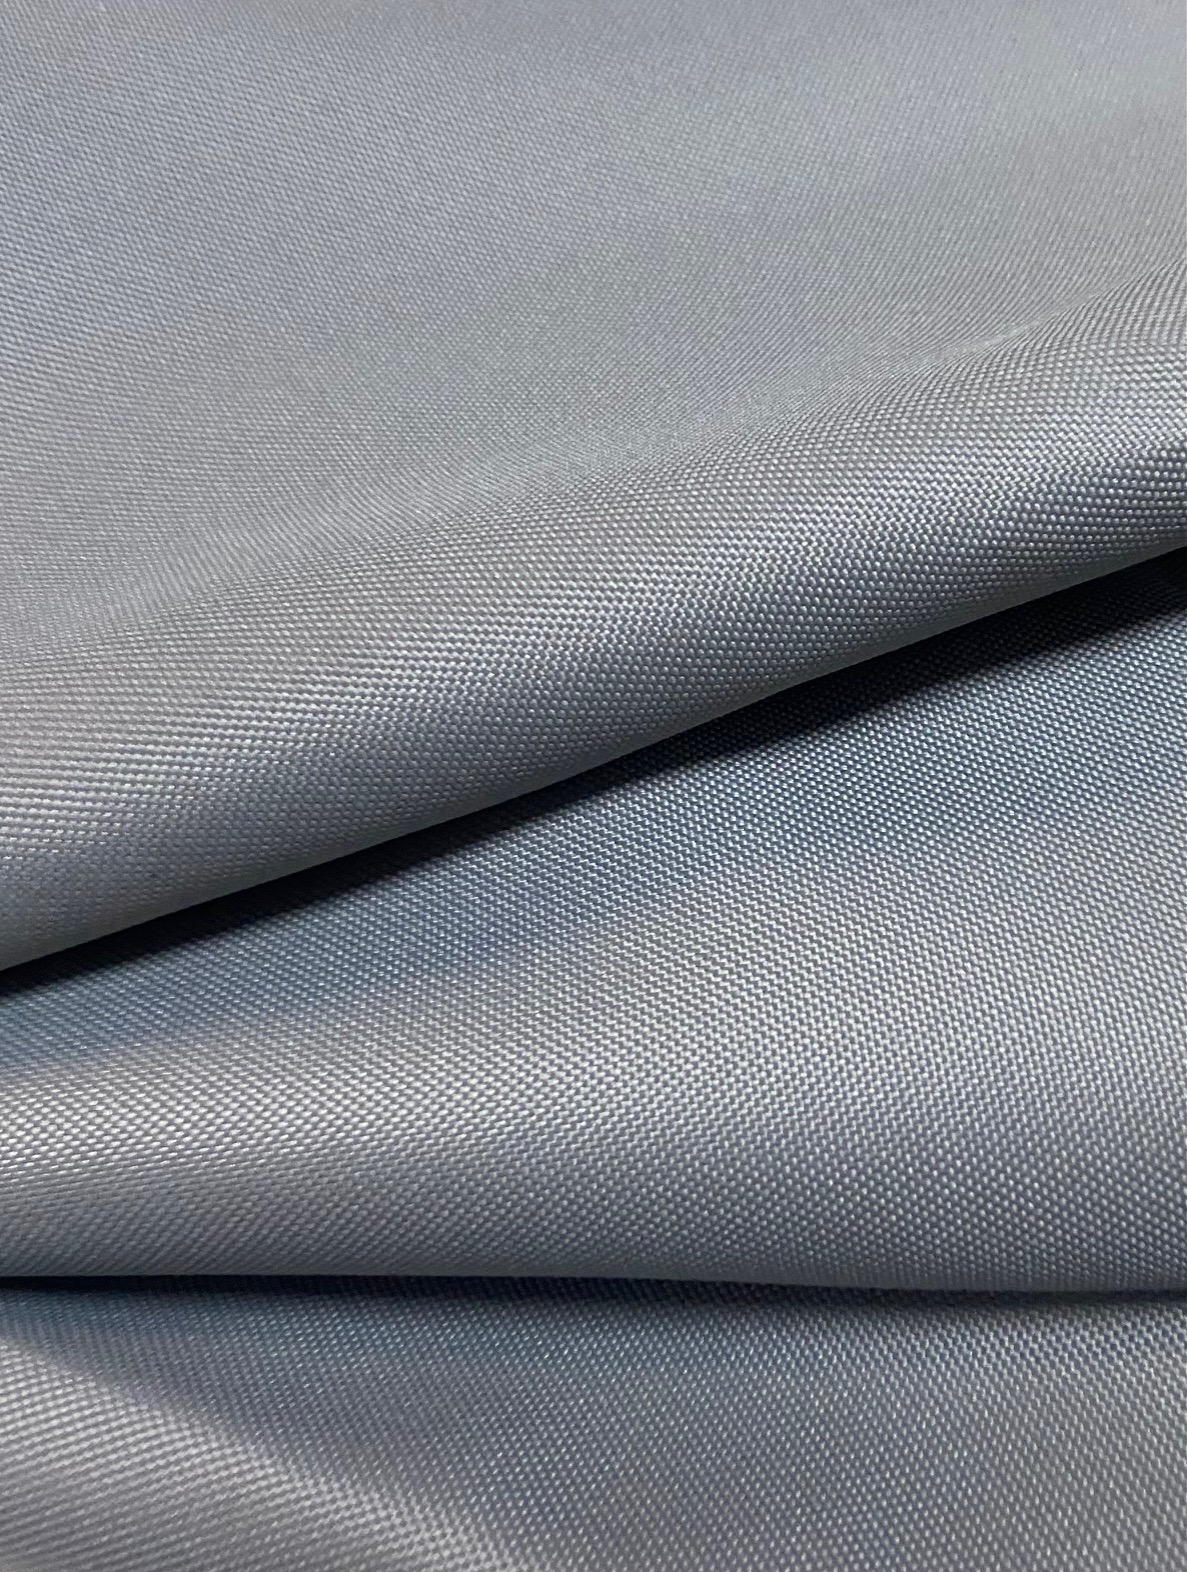 Oxford Fabric, weight 200g/m², width 160cm, grey. Polyester PU.